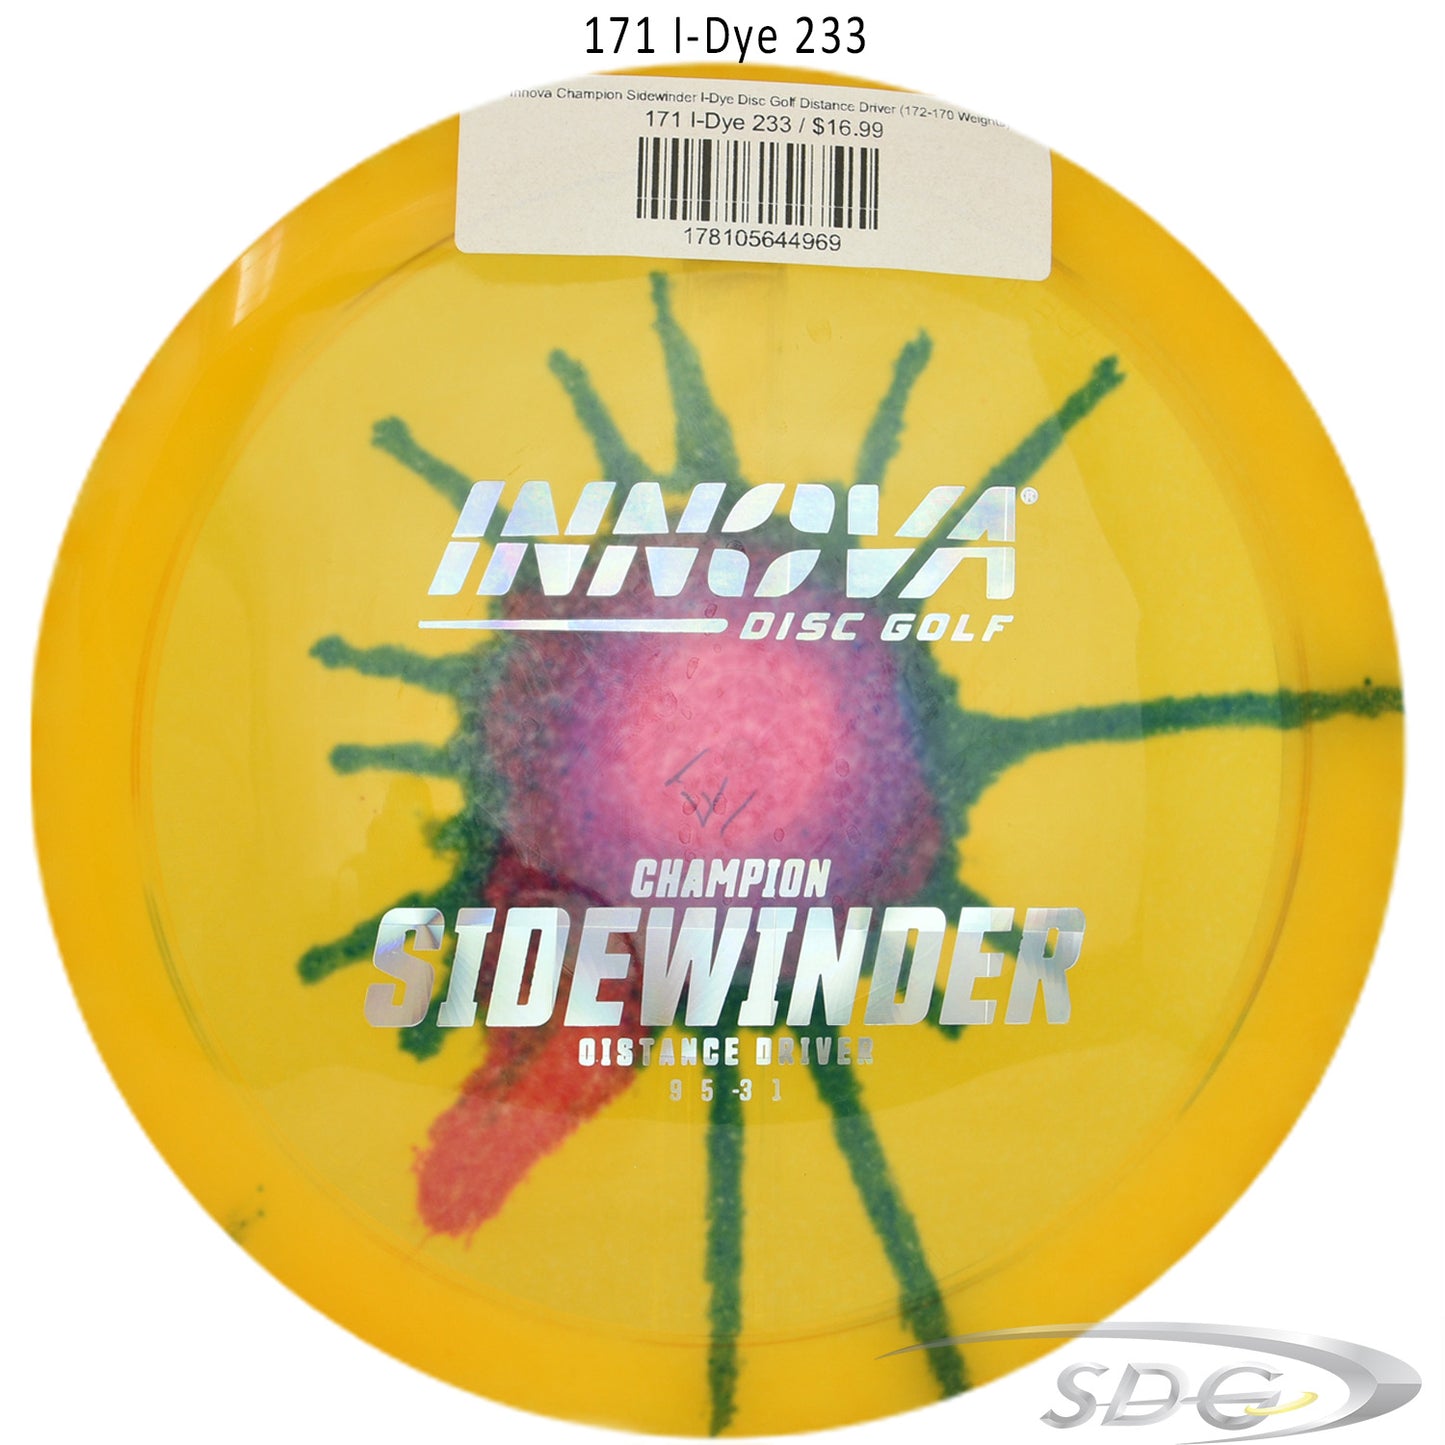 Innova Champion Sidewinder I-Dye Disc Golf Distance Driver